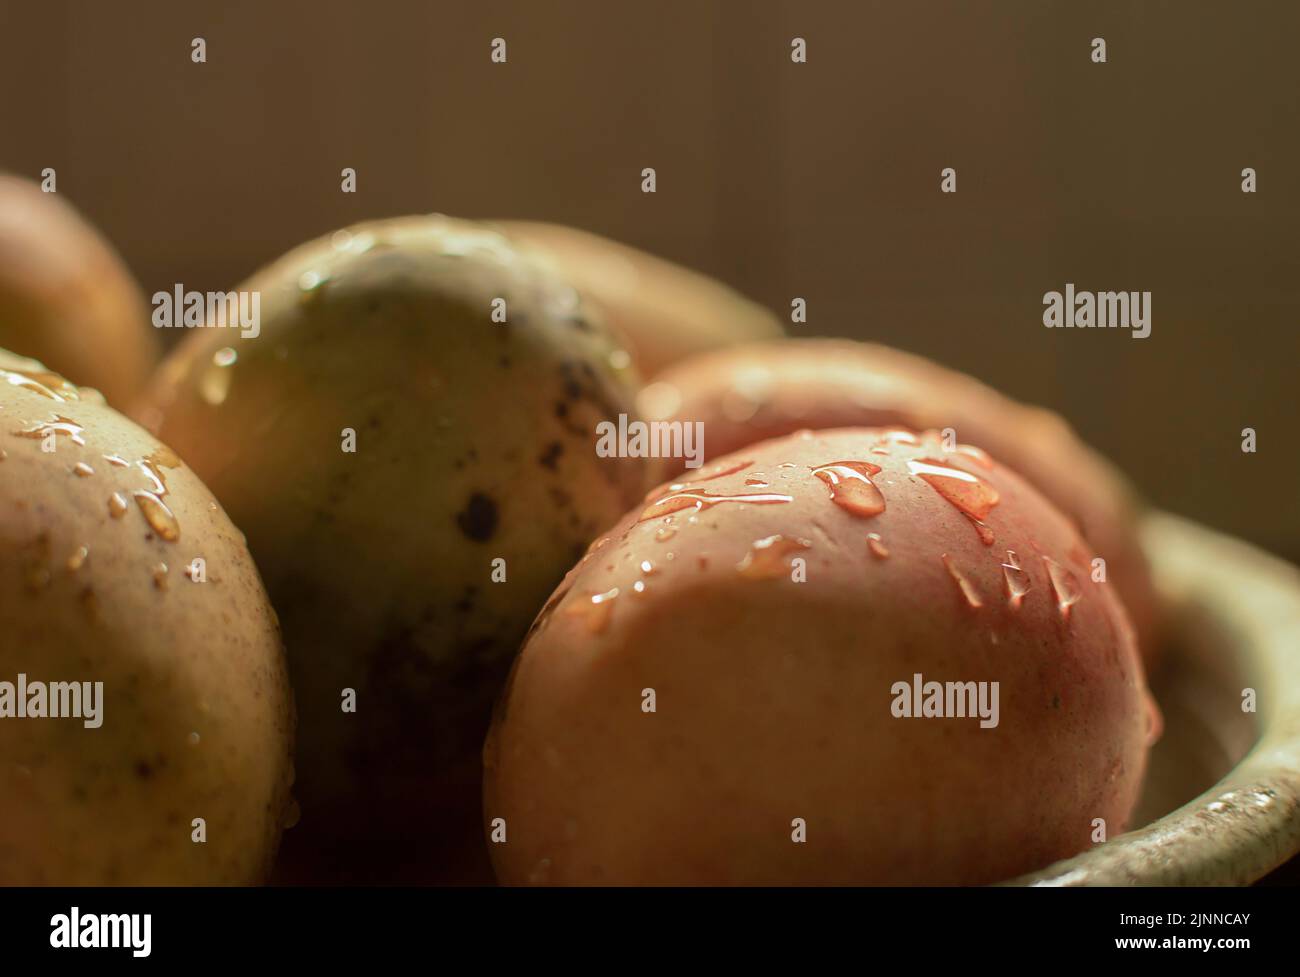 Mangos recién lavados en tazón con espacio para copias, concepto de mangos frescos en una cesta con salpicaduras de agua, mangos maduros con gotas de agua en tazón Foto de stock